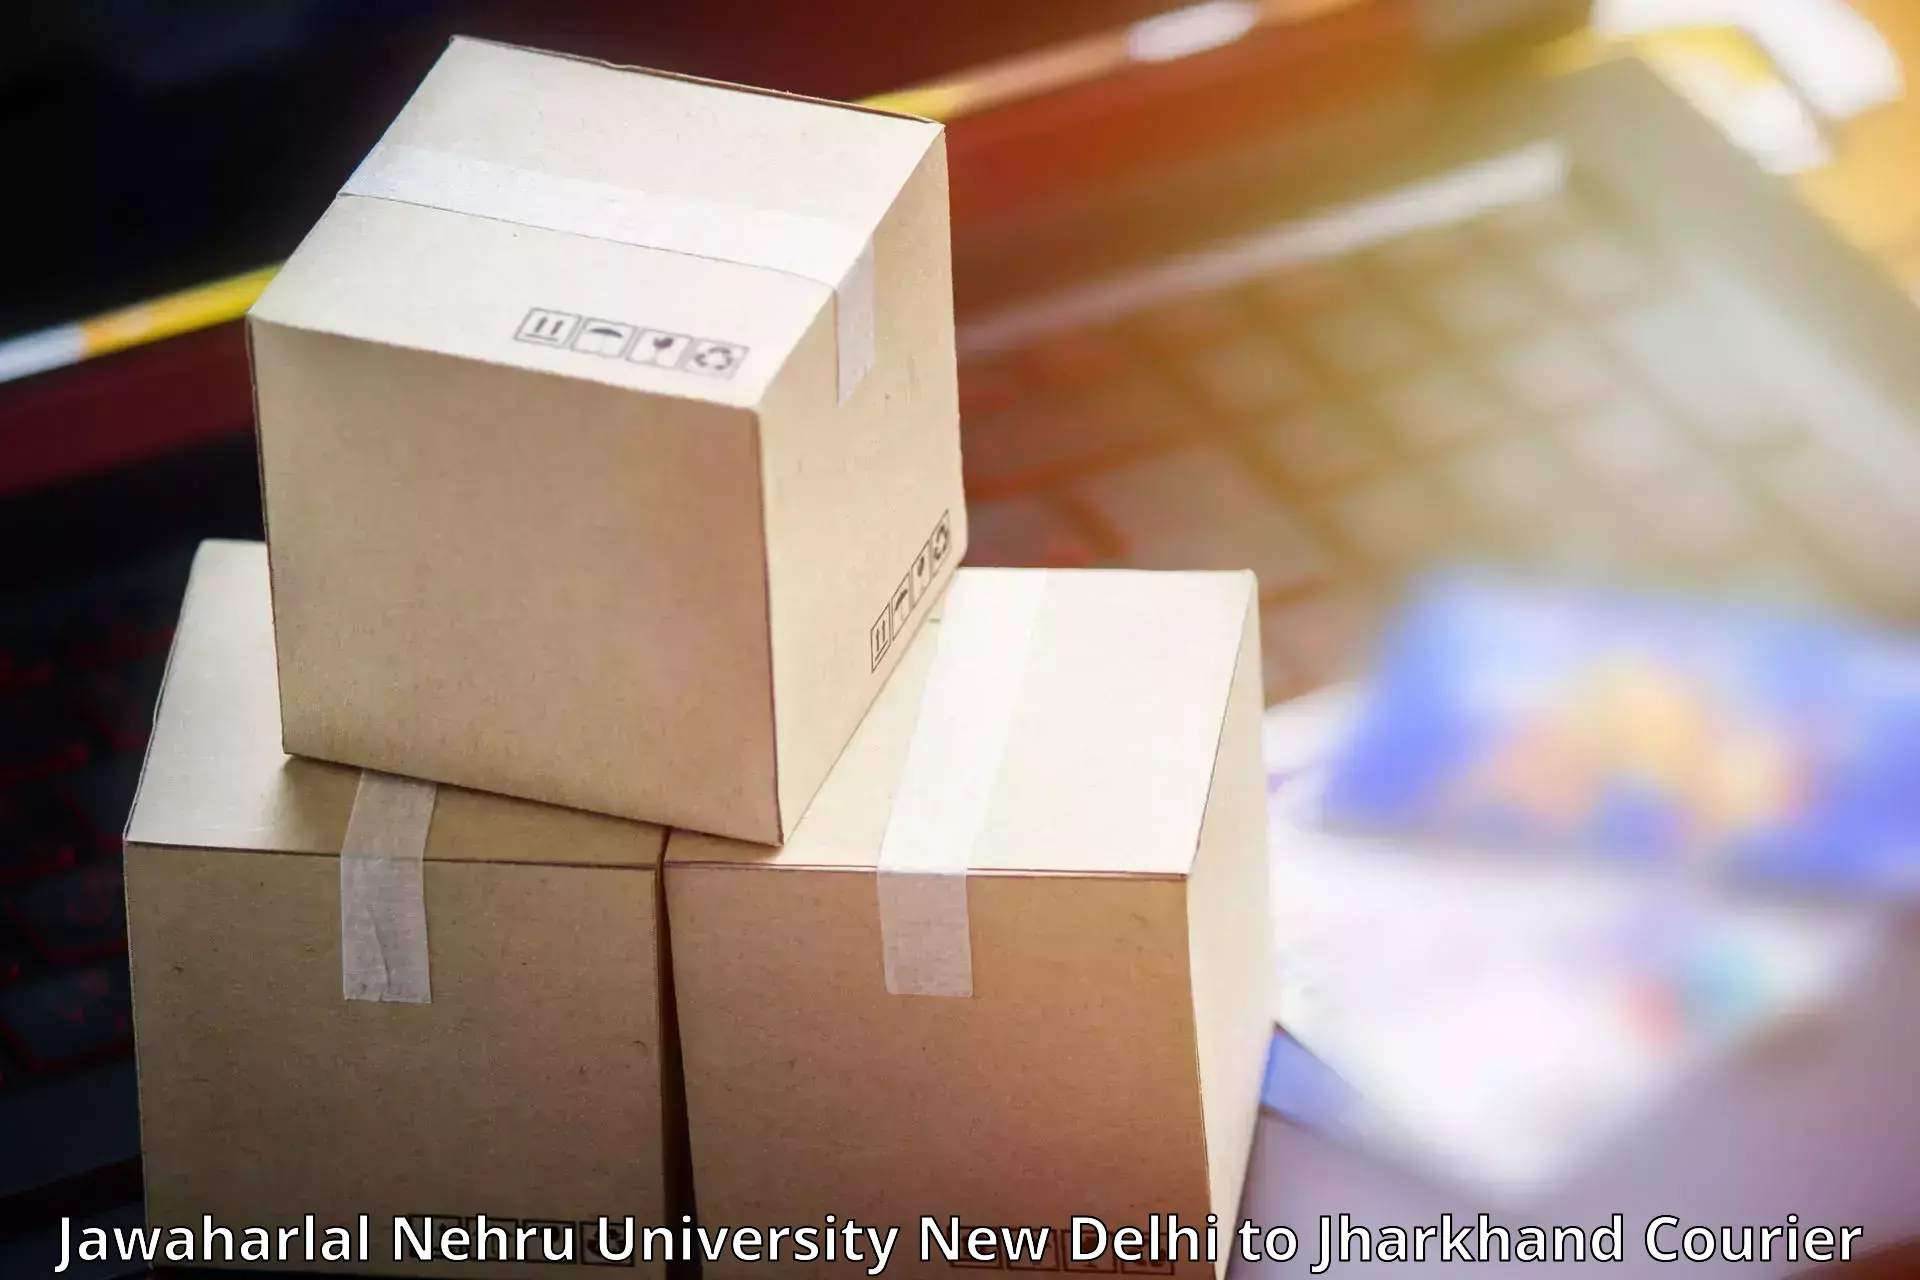 Streamlined delivery processes Jawaharlal Nehru University New Delhi to Jamshedpur